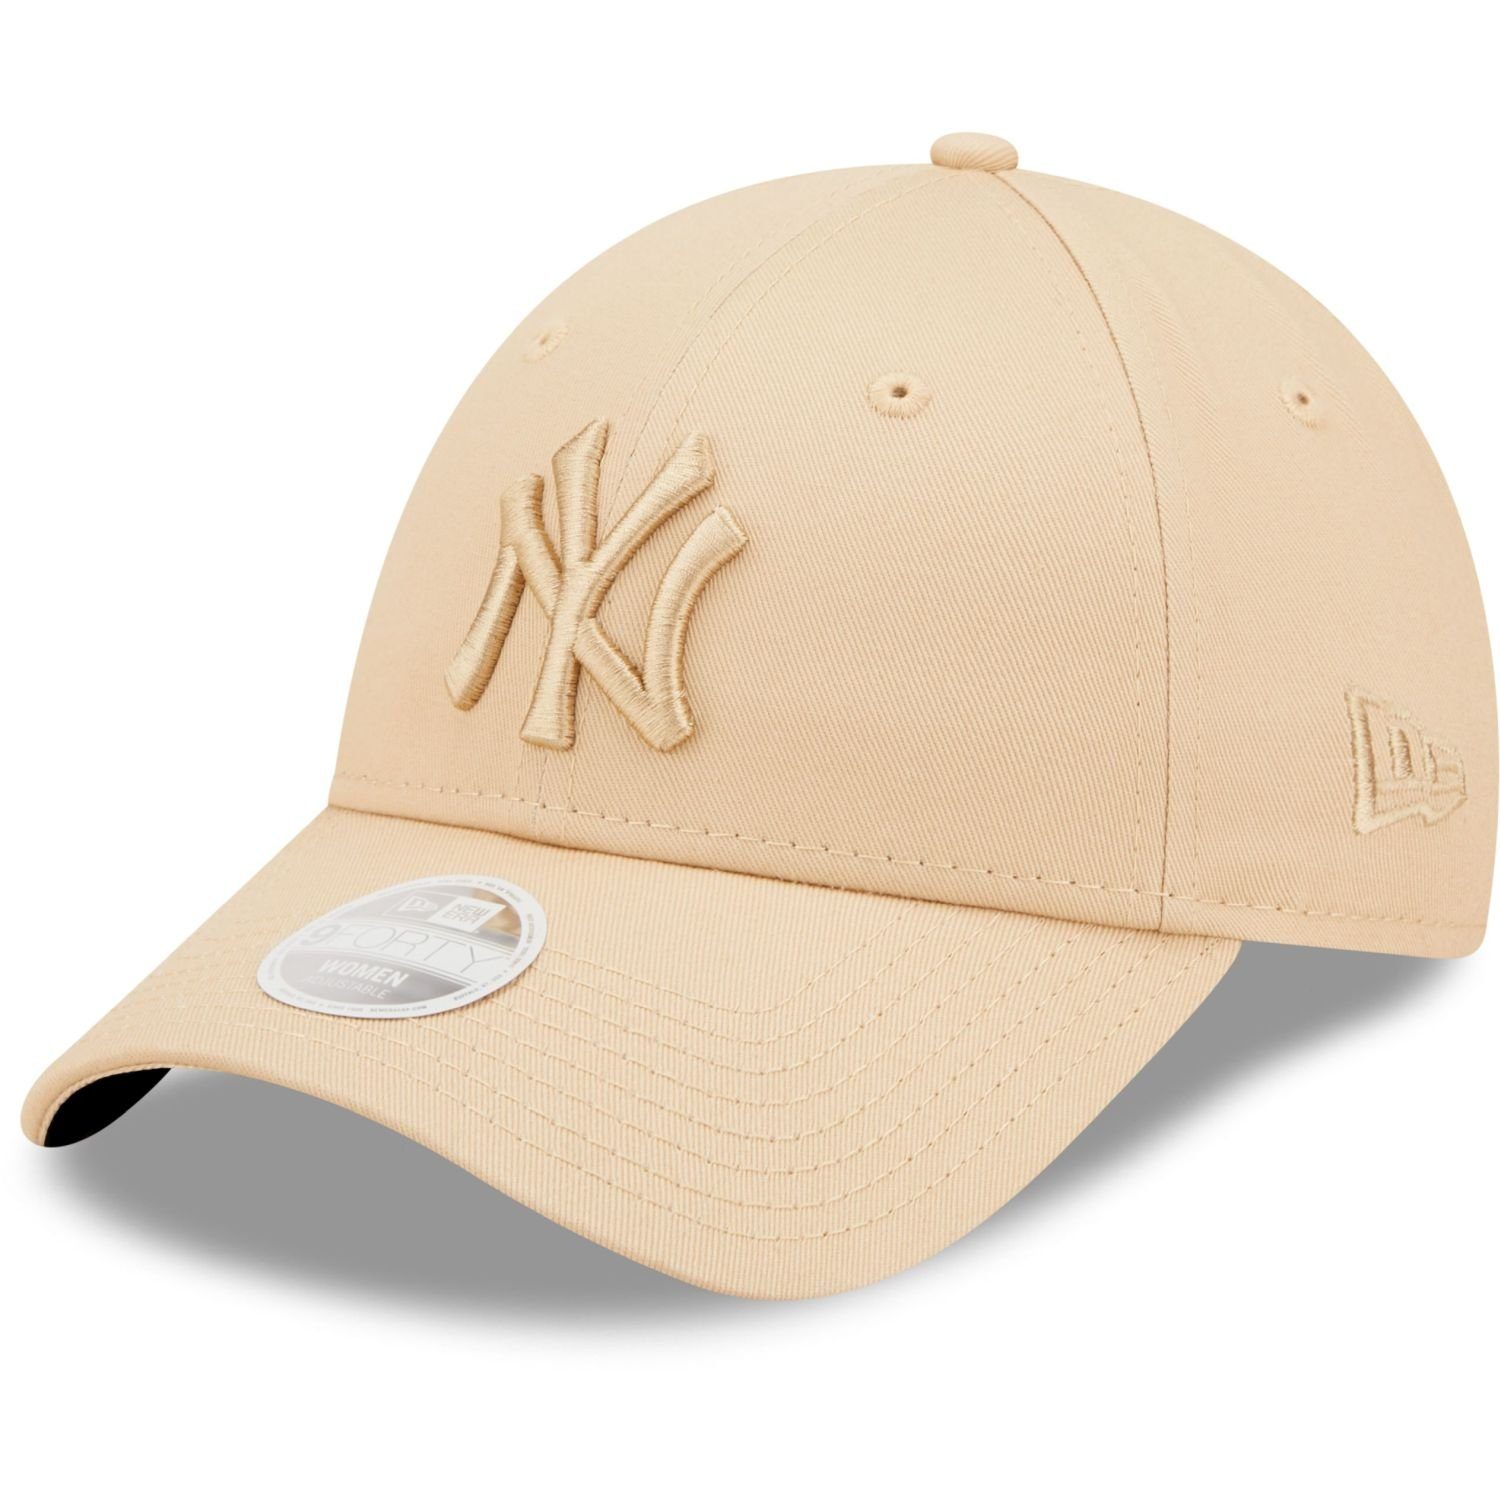 New Era Baseball Cap 9Forty New York Yankees cream